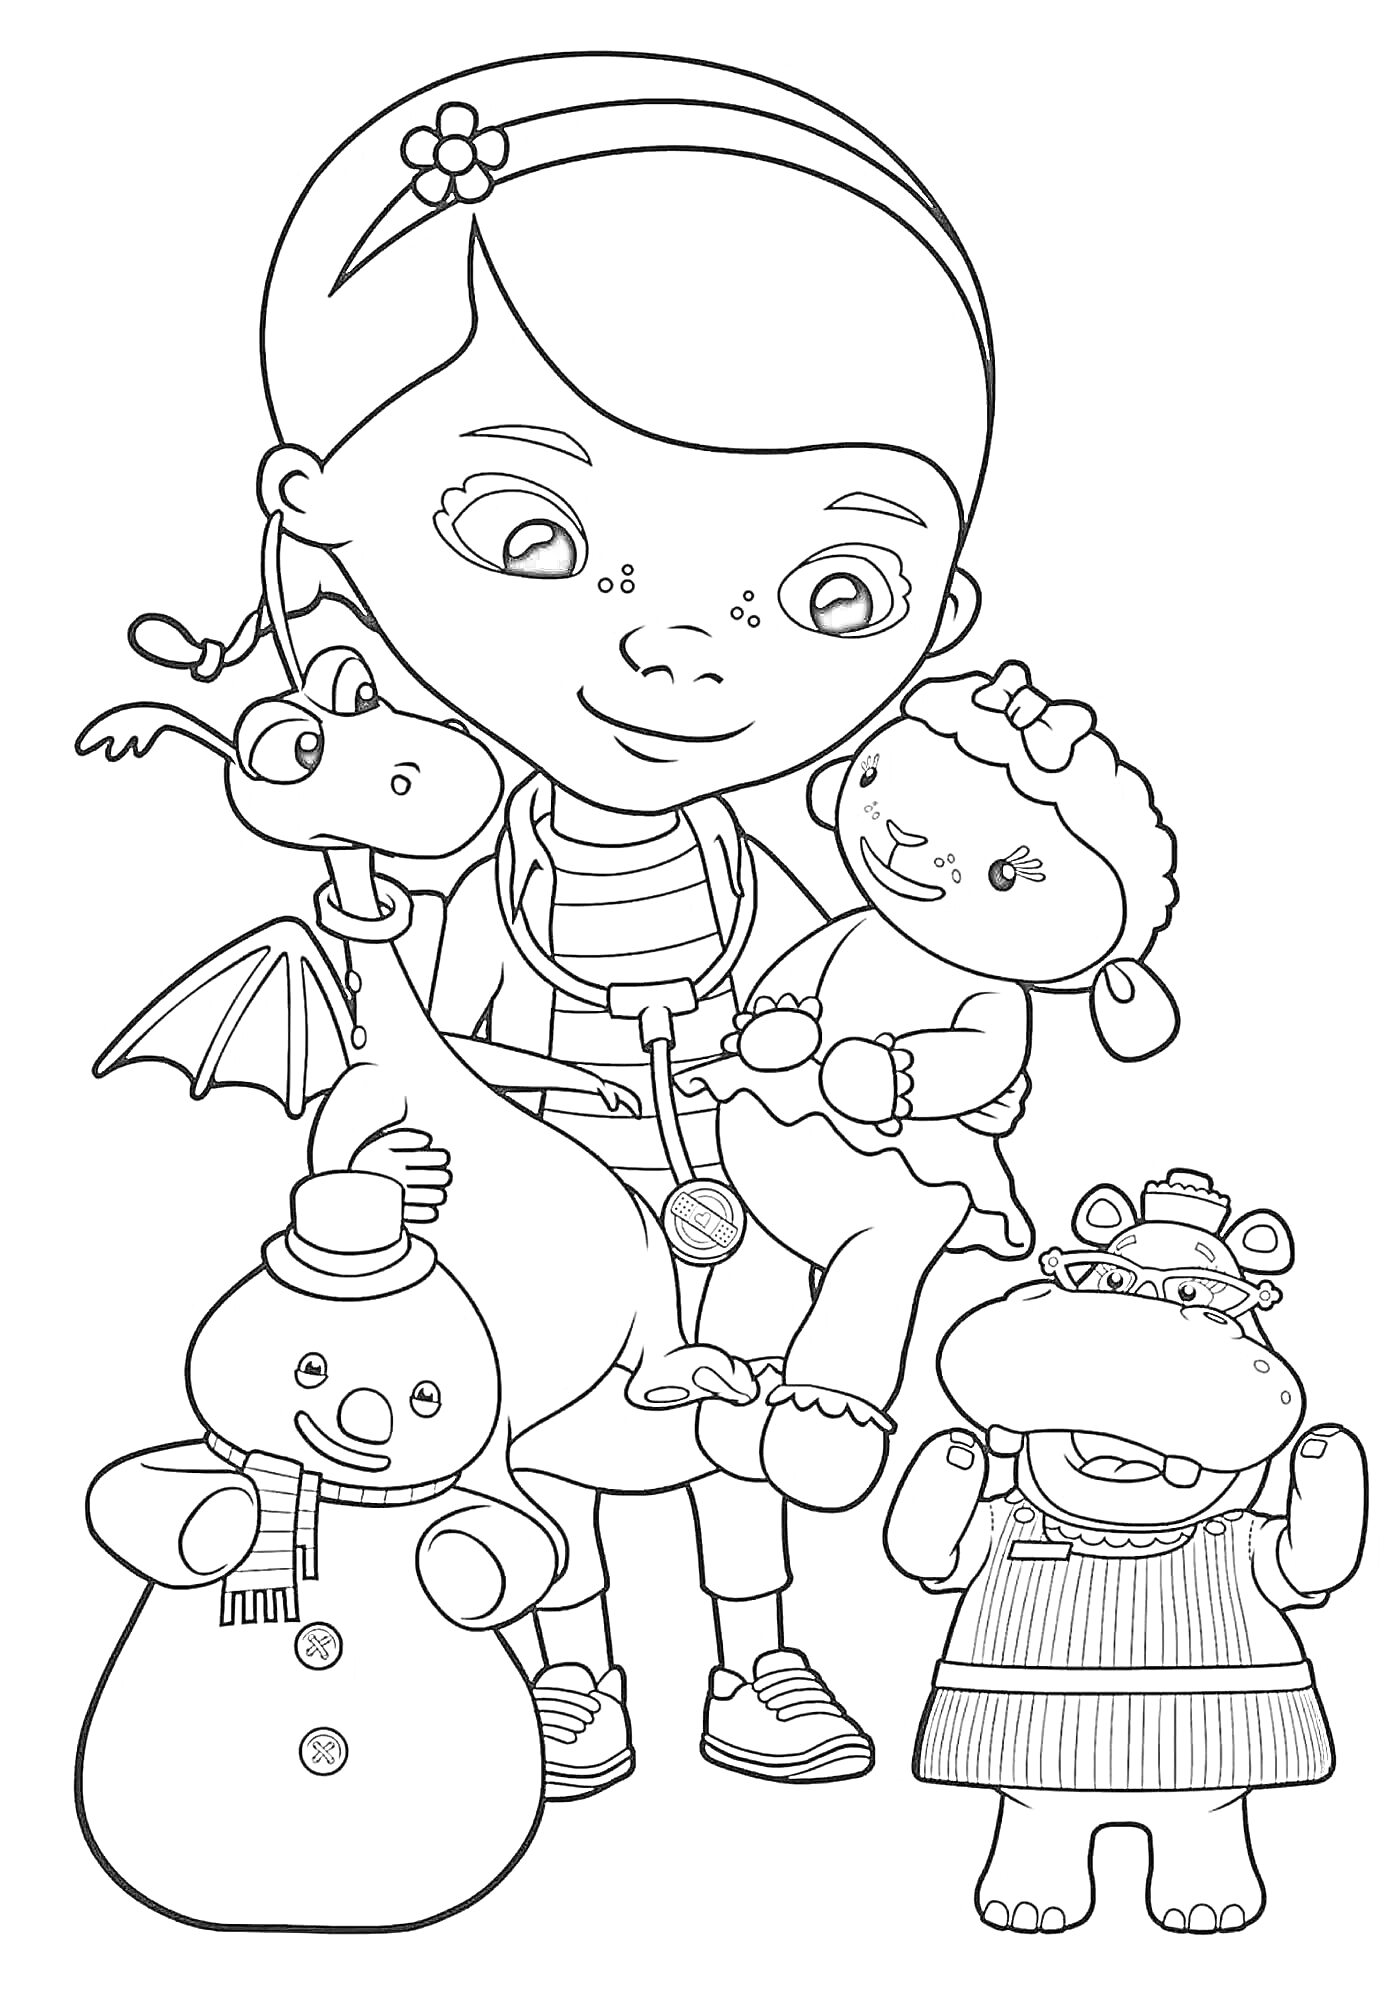 Раскраска Девочка с игрушками - дракон, овечка, снеговик и бегемот